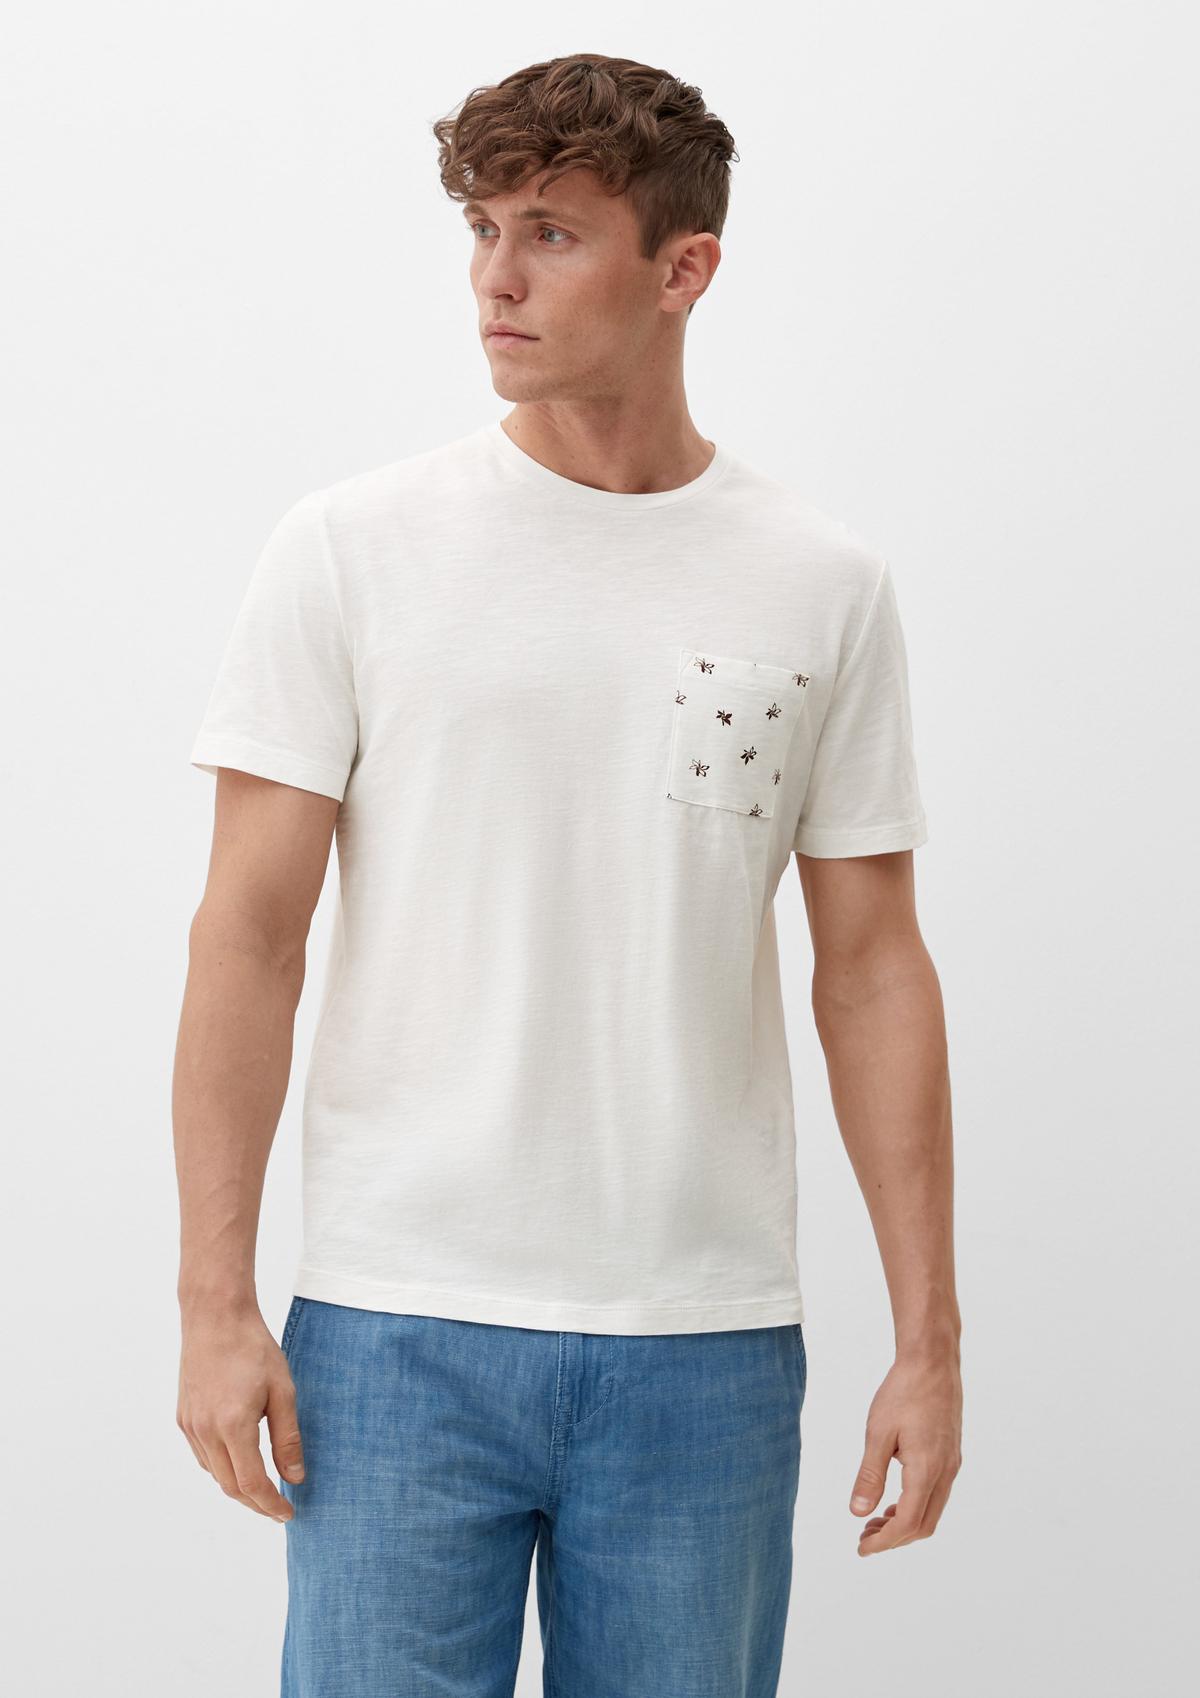 Cotton T-shirt white 